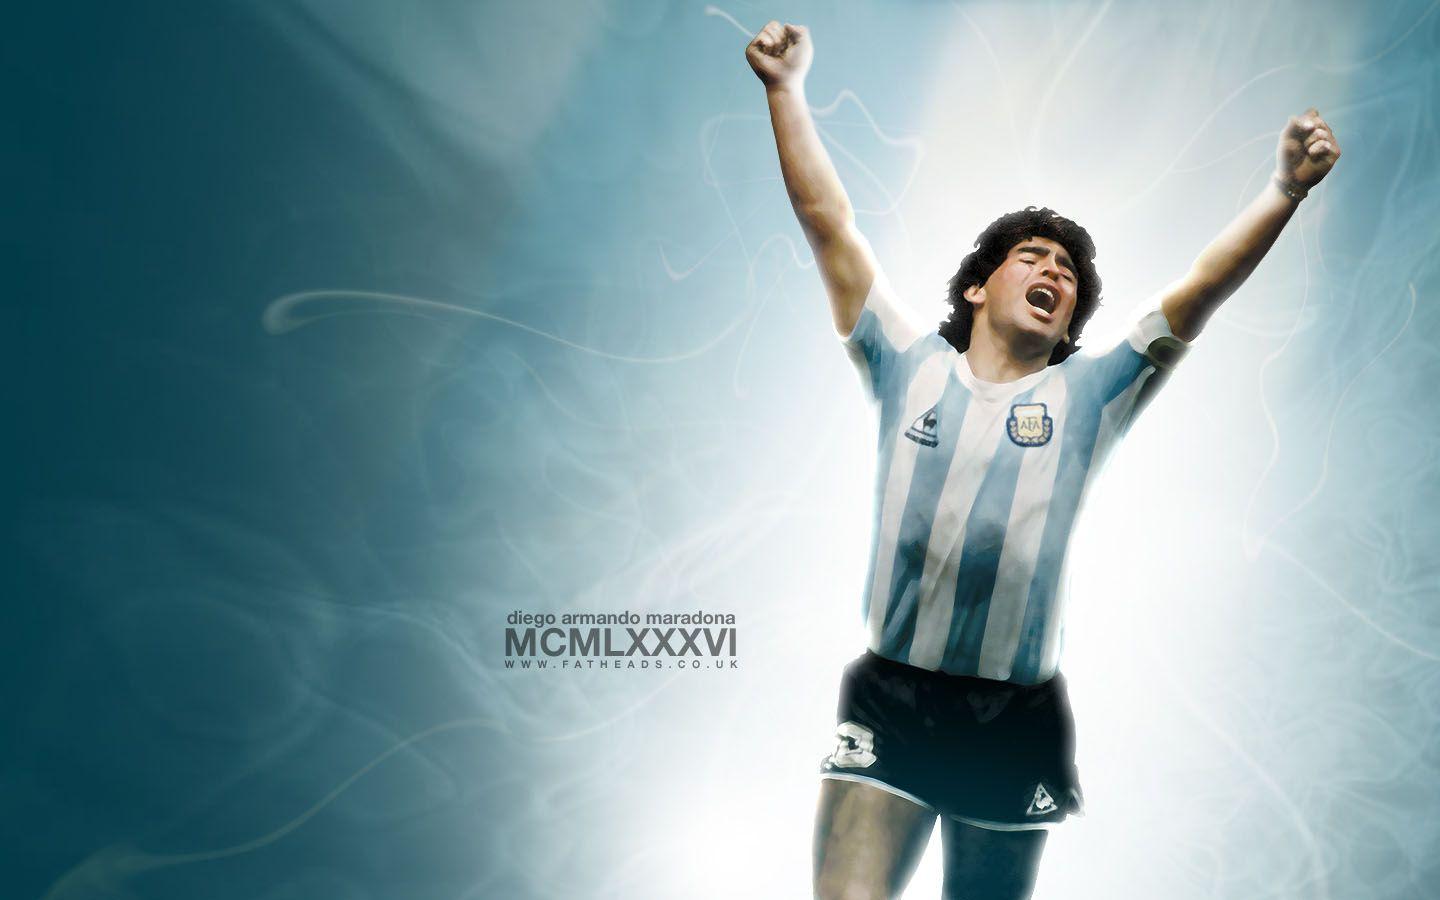 Rip Maradona Wallpapers